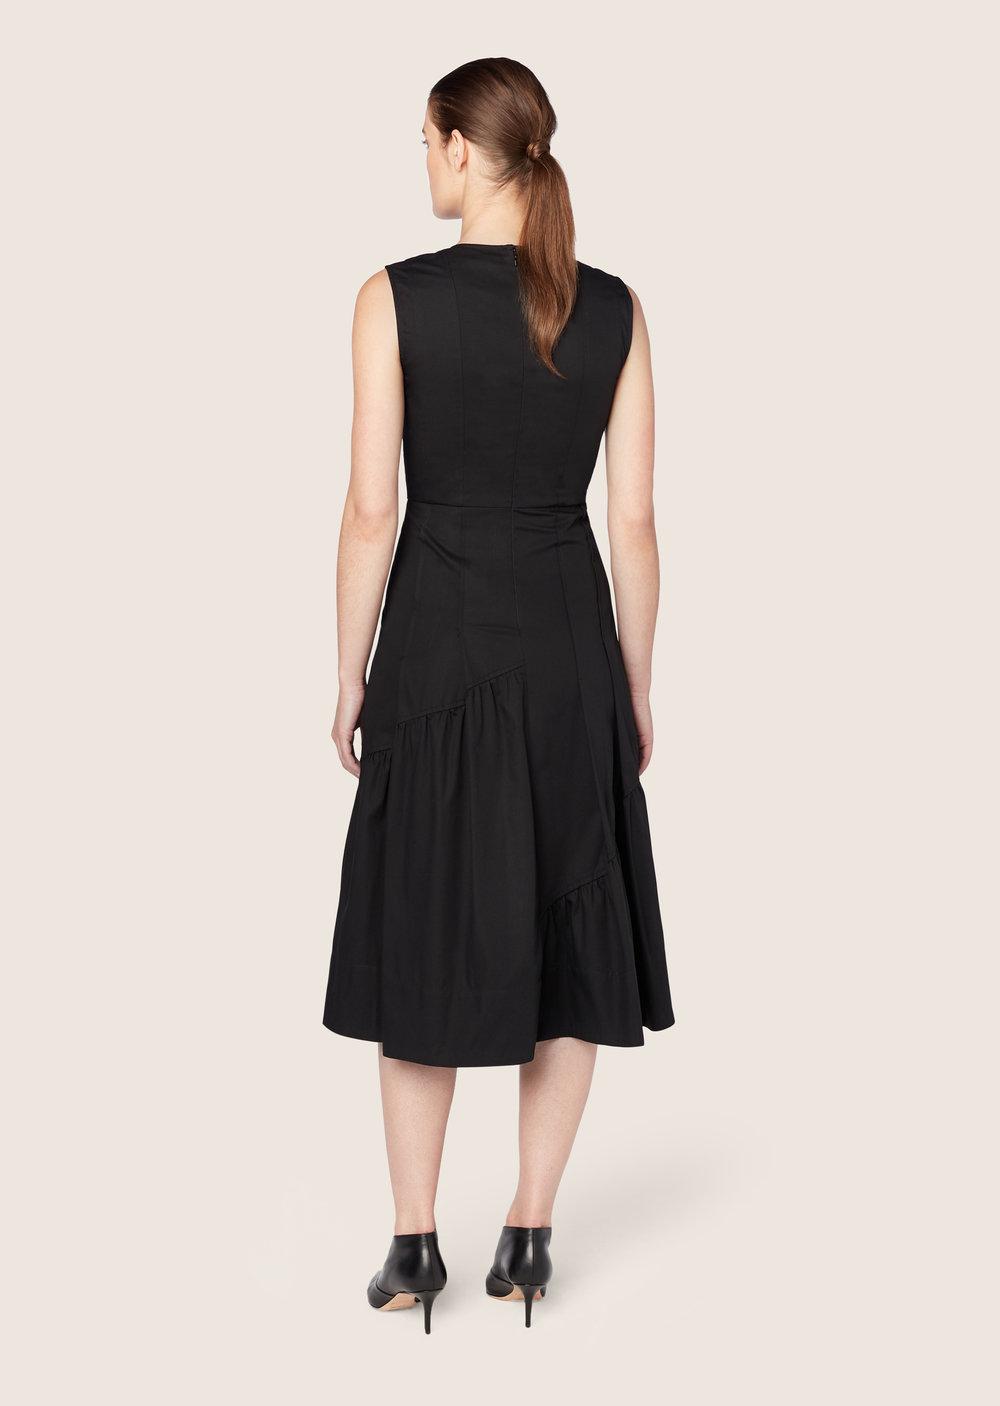 Derek Lam Cotton Sleeveless Dress With Shirring Detail in Black - Lyst